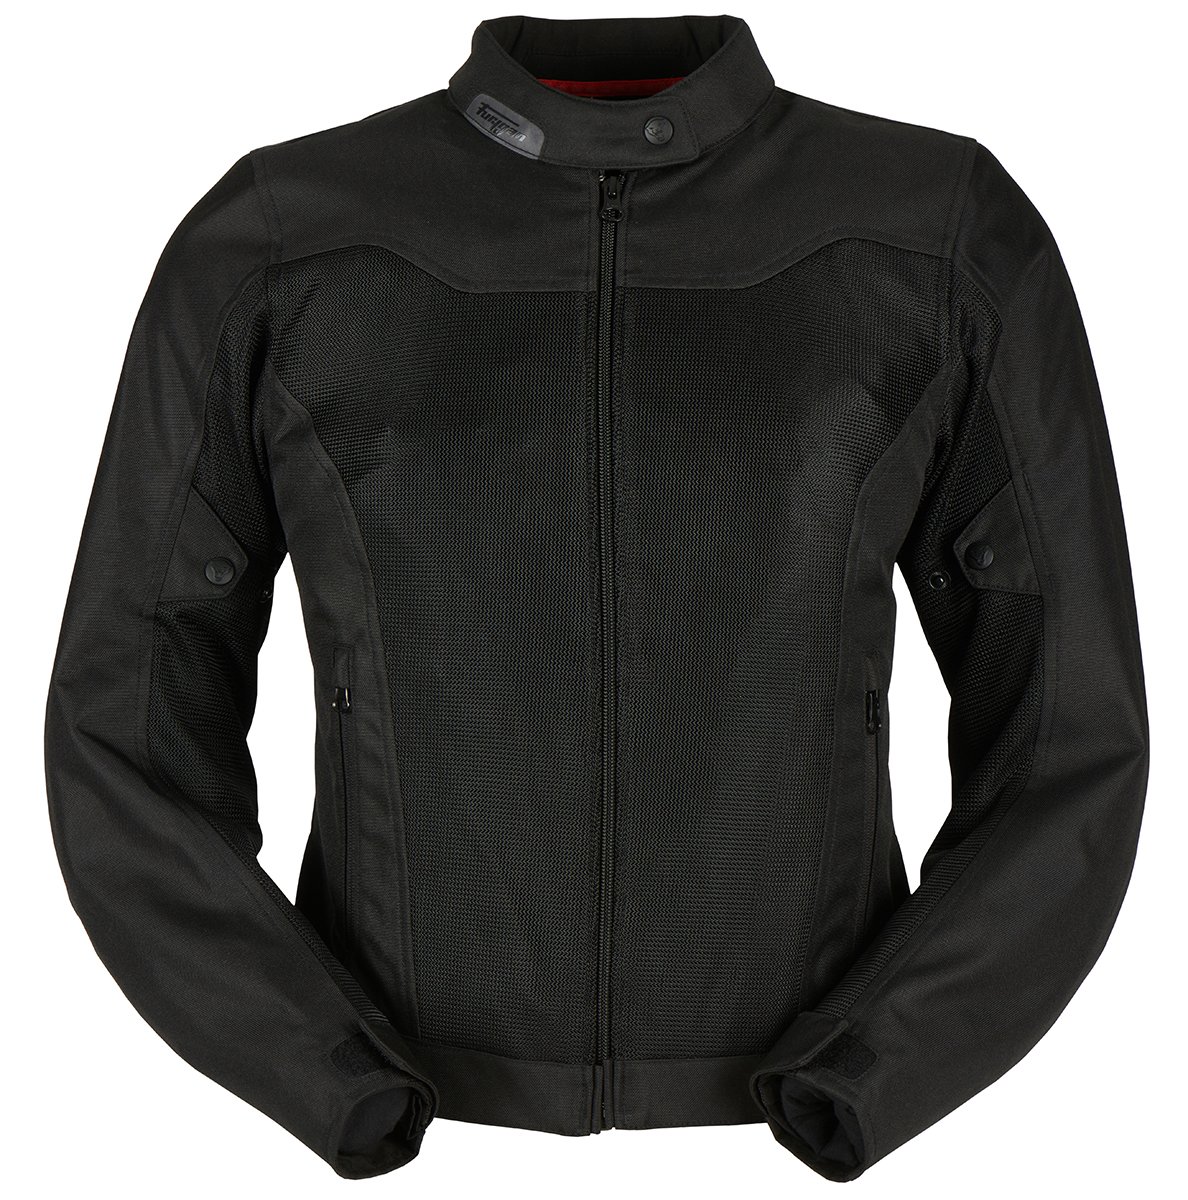 Image of Furygan Mistral Evo 3 Jacket Lady Black Size 2XL ID 3435980342388